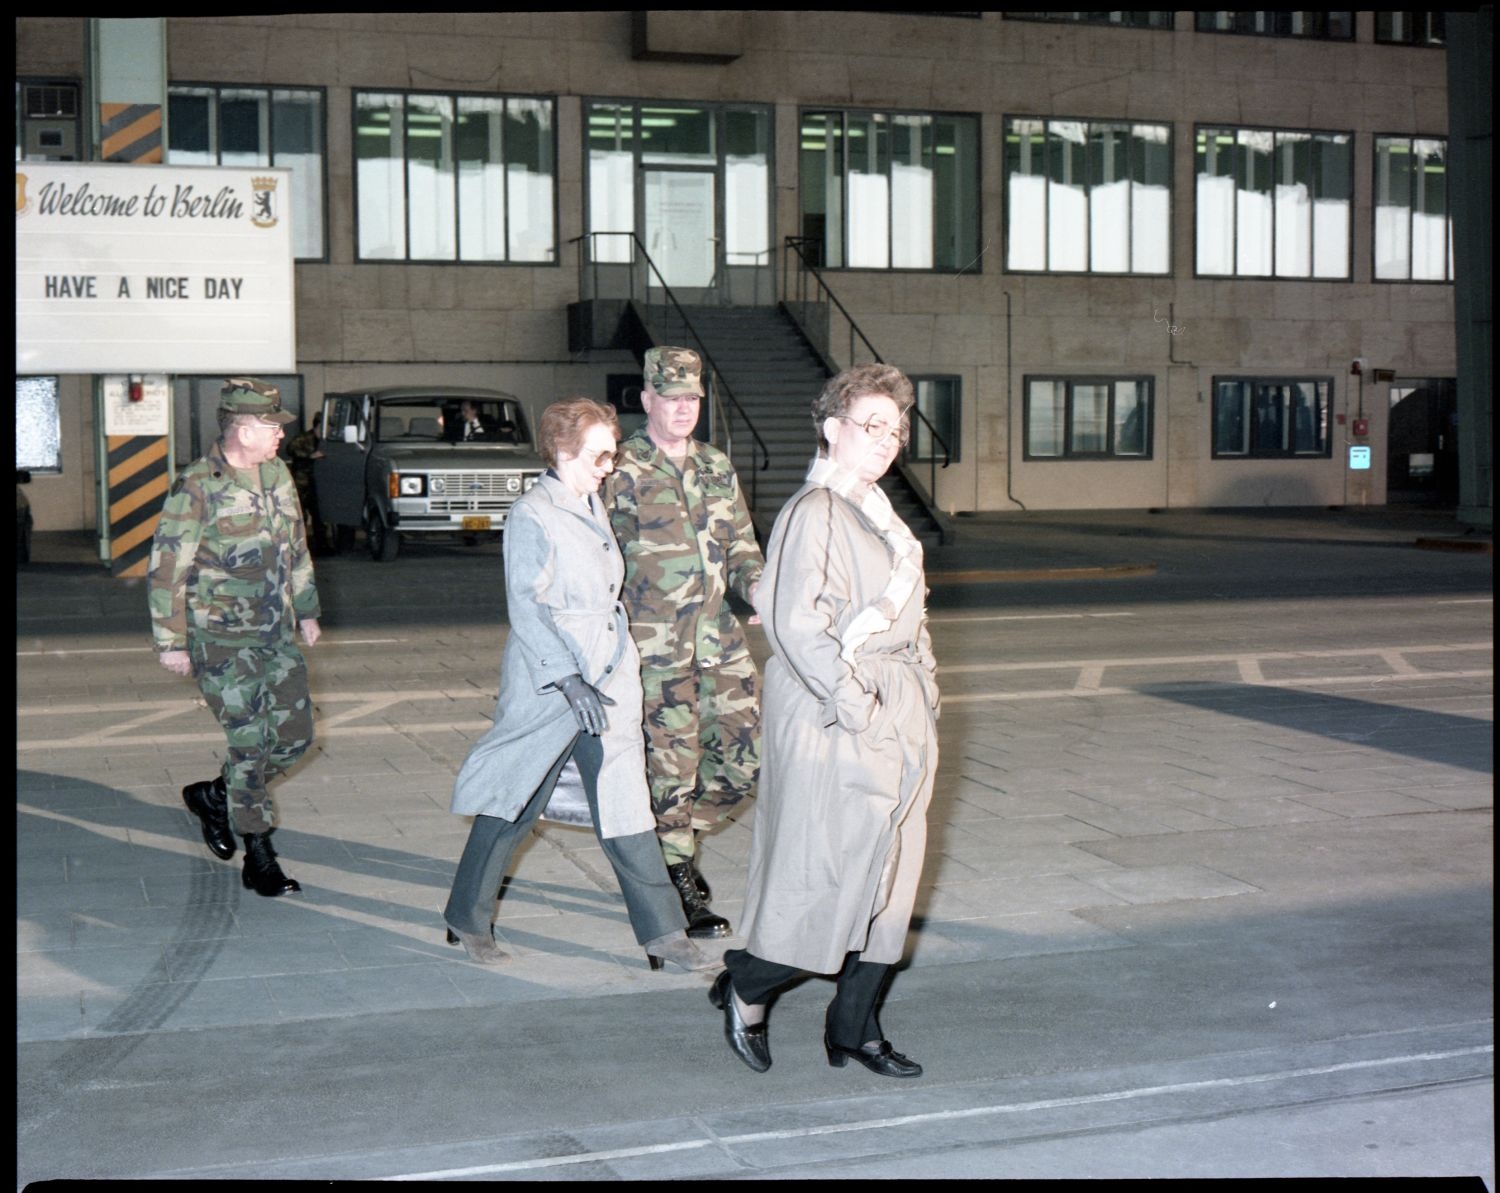 Fotografie: Besuch von Sergeant Major of the Army Glen E. Morrell in West-Berlin (AlliiertenMuseum/U.S. Army Photograph Public Domain Mark)